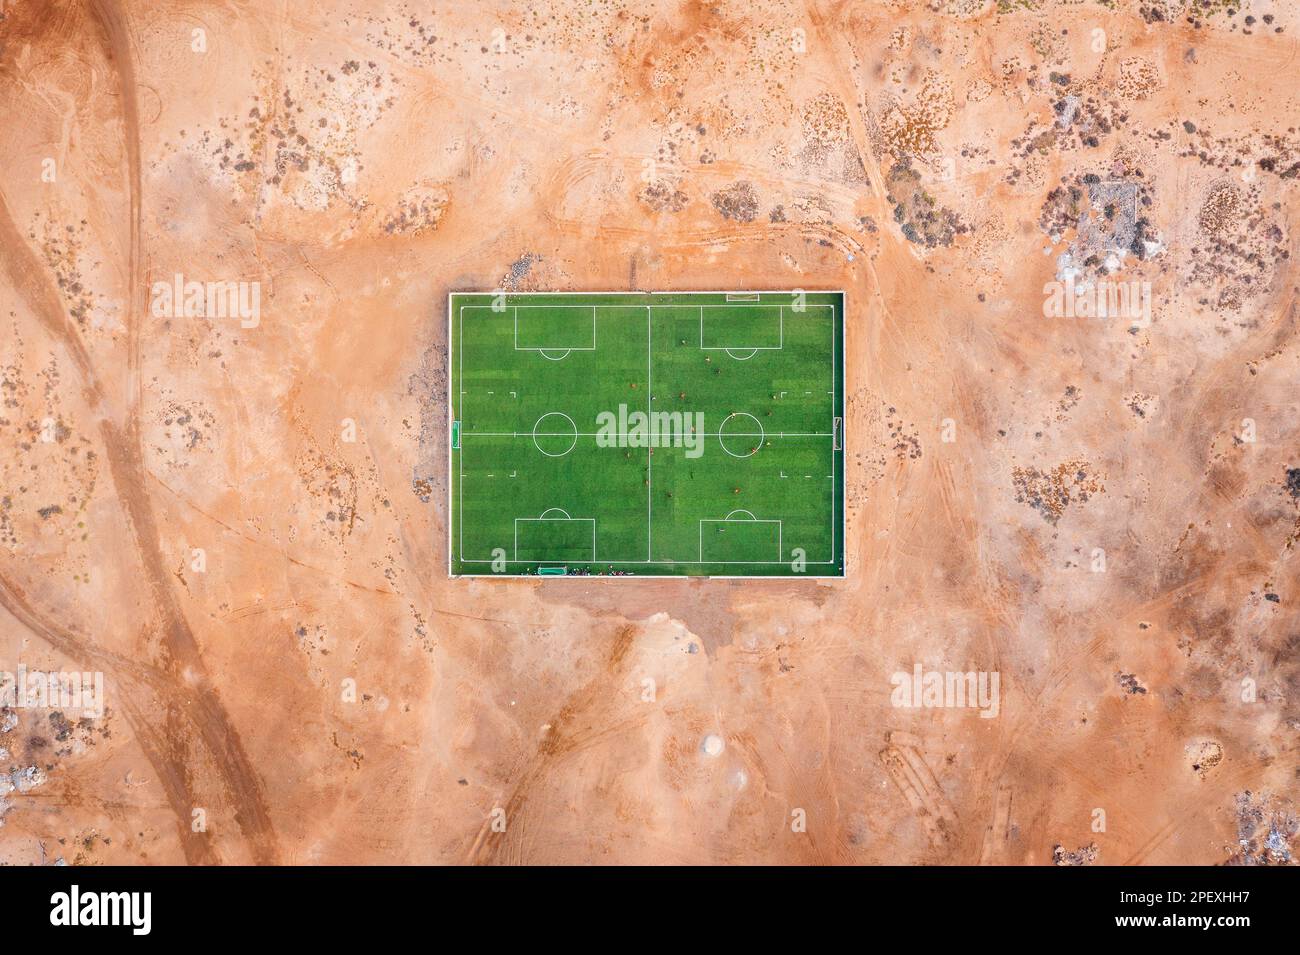 Playing soccer in desert dust beneath the Rifa-Fort, Rifa, Kingdom